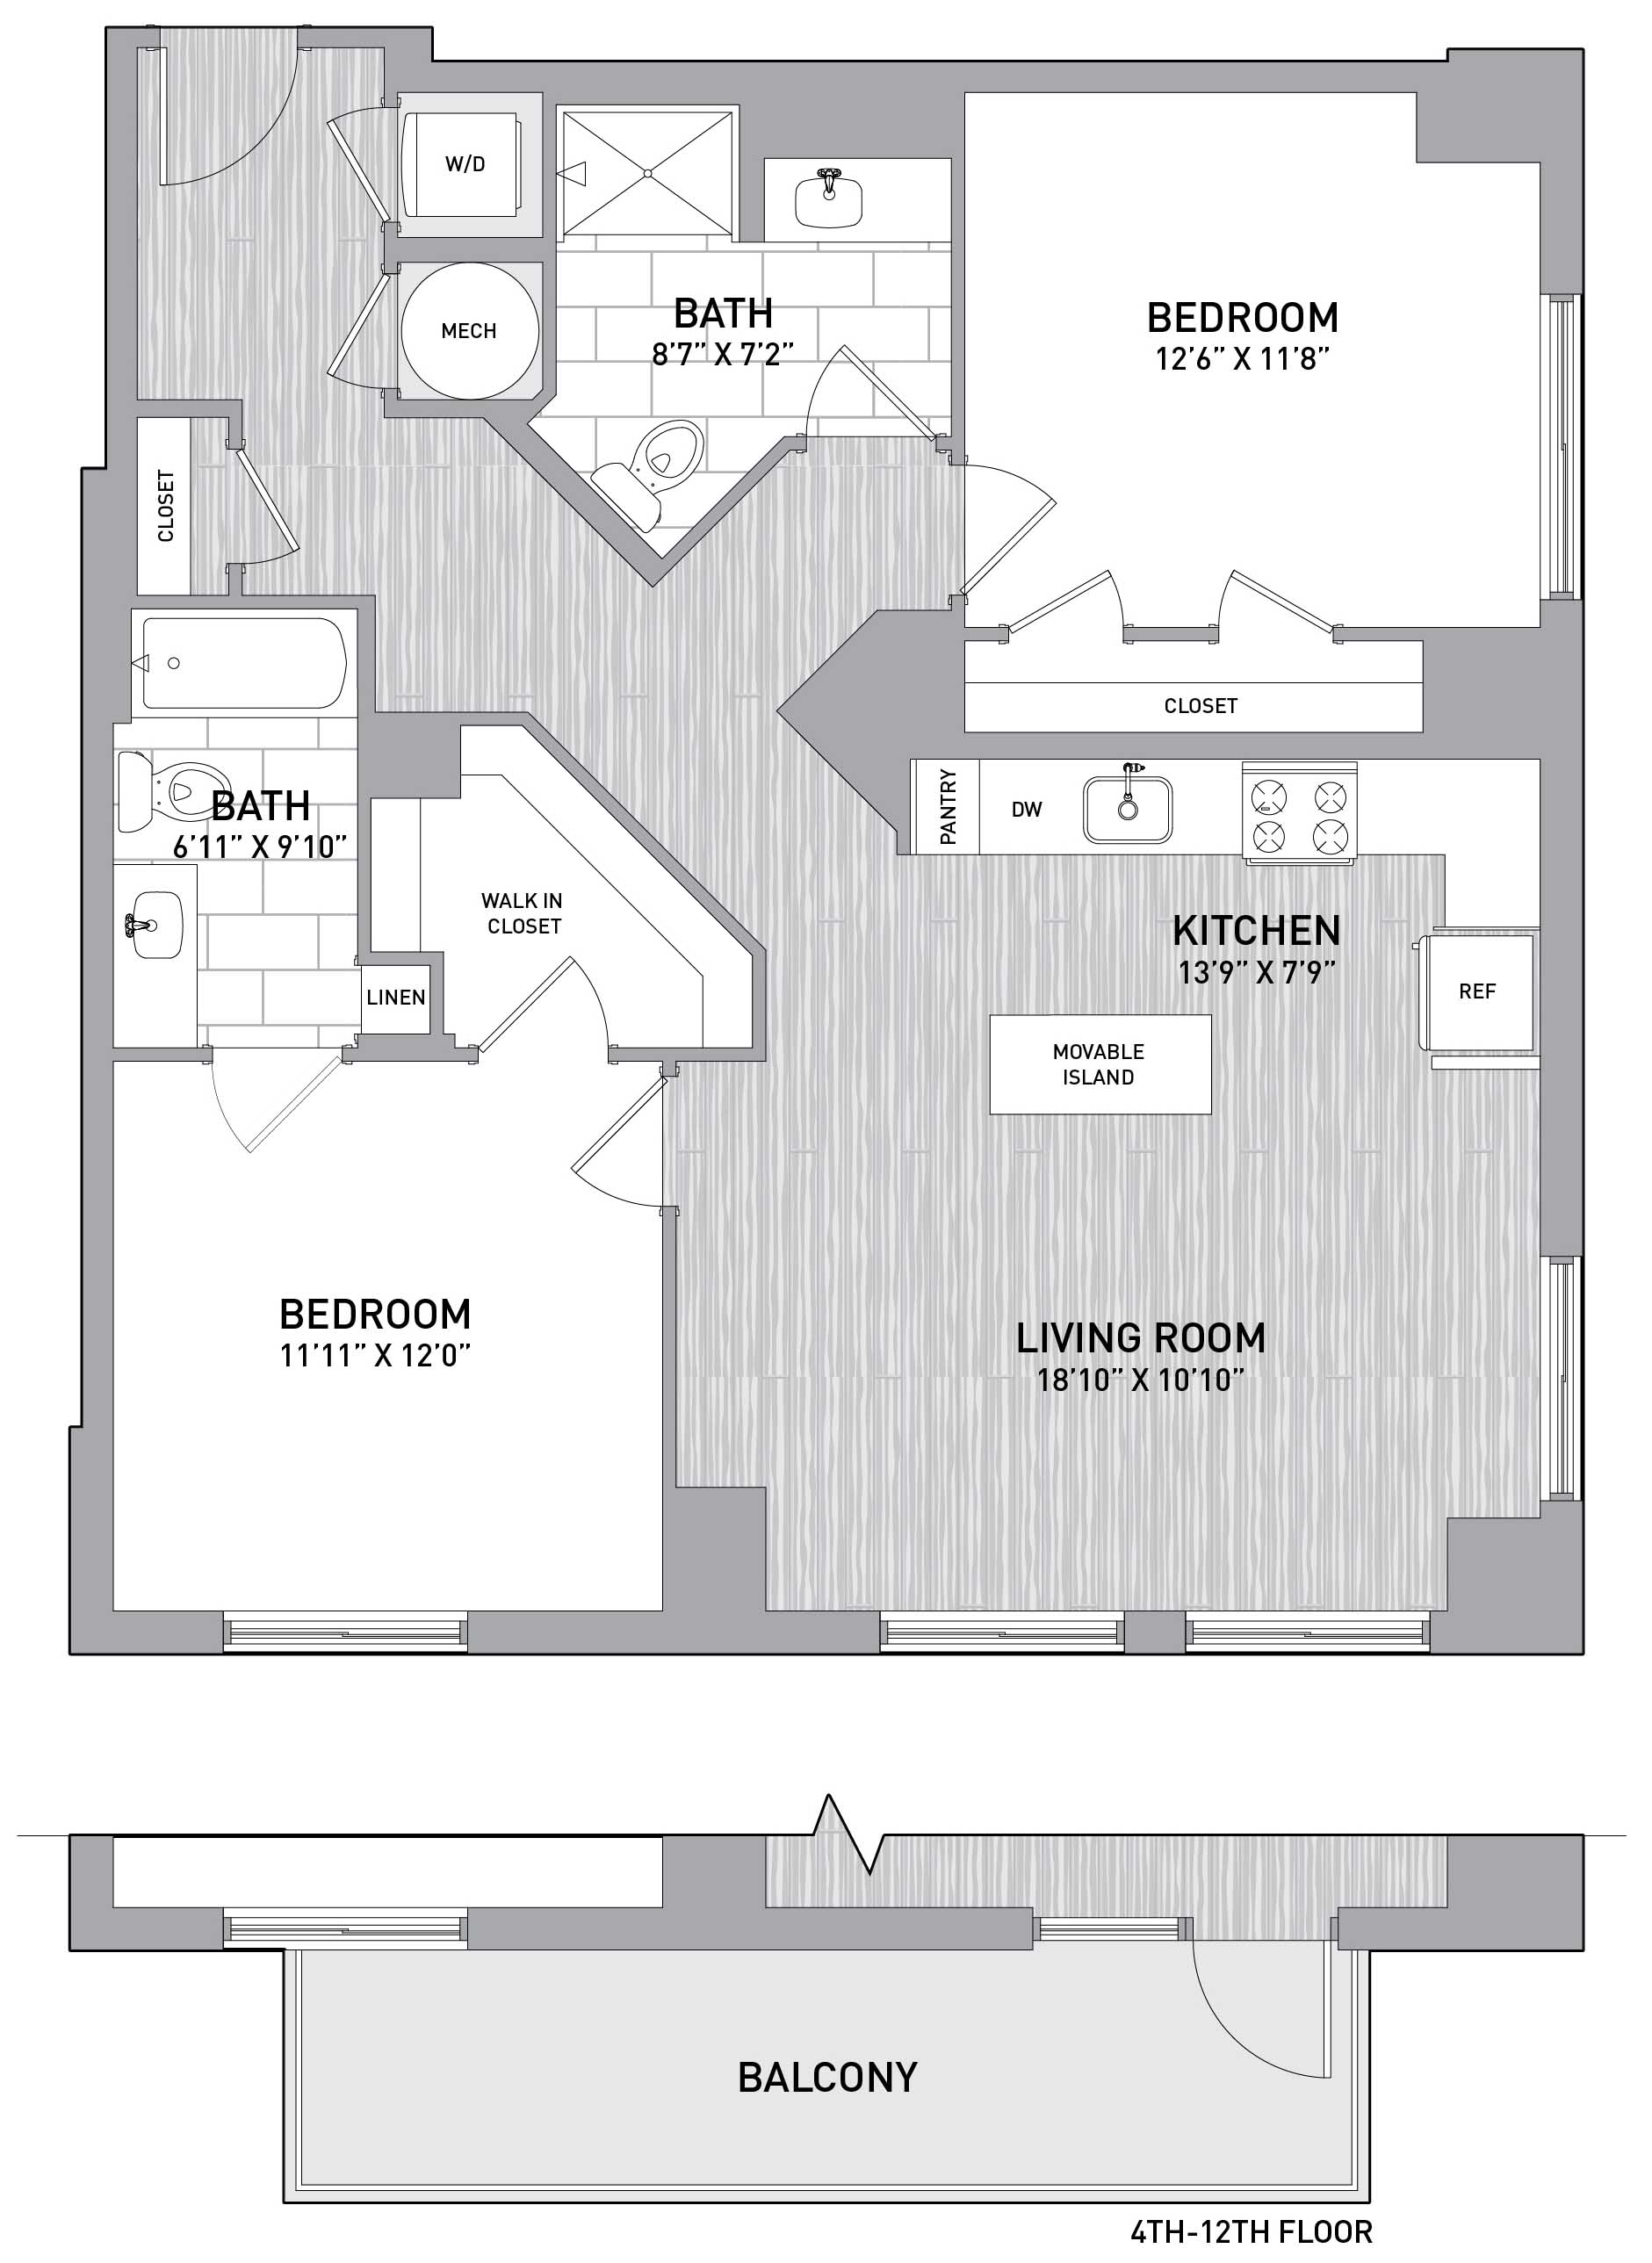 Floor Plan Image of Apartment Apt 151-1011